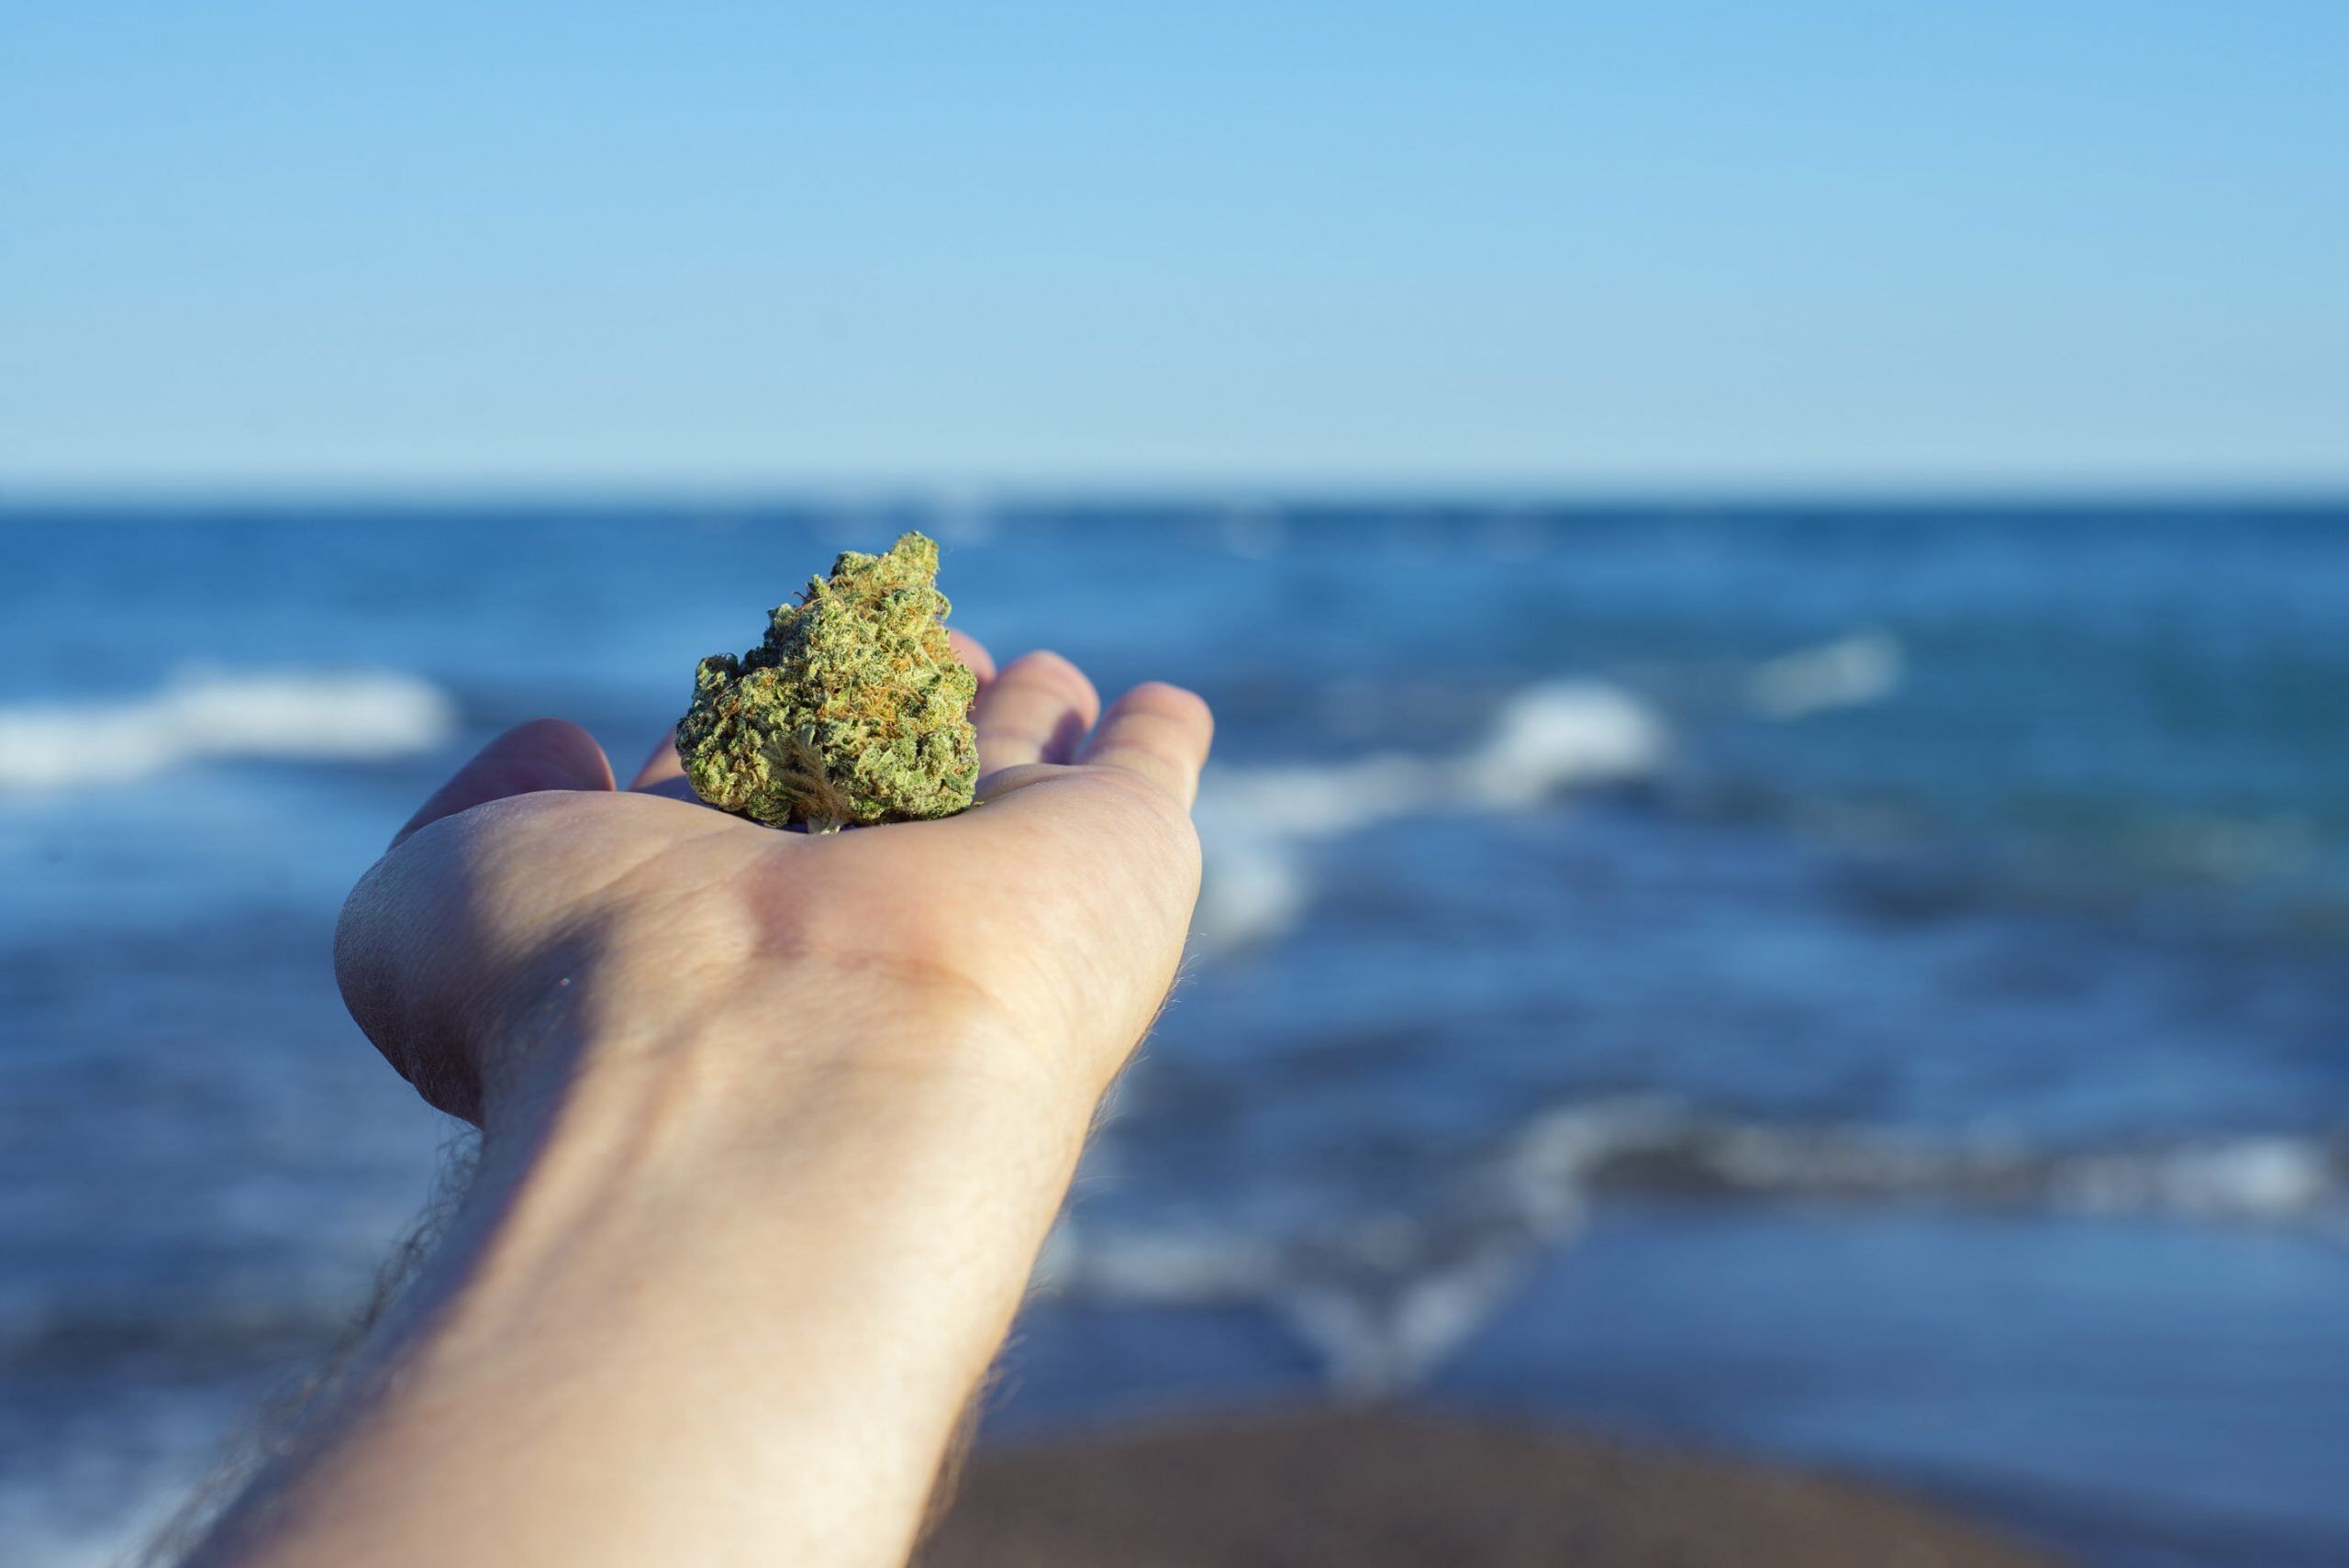 august 2020 photo contest Hand holding a cannabis nug against ocean waves and blue sky landscape - medical marijuana concept